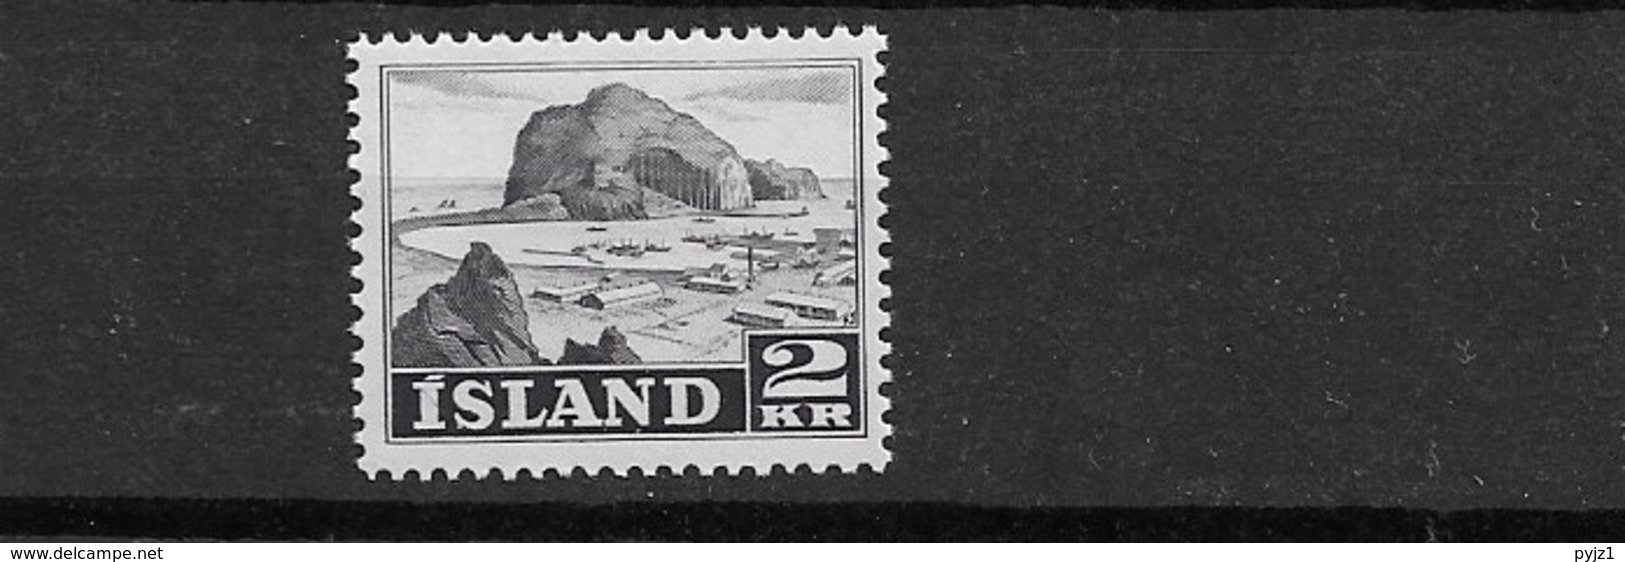 1950 MNH Iceland, Island, Mi 269 - Nuevos